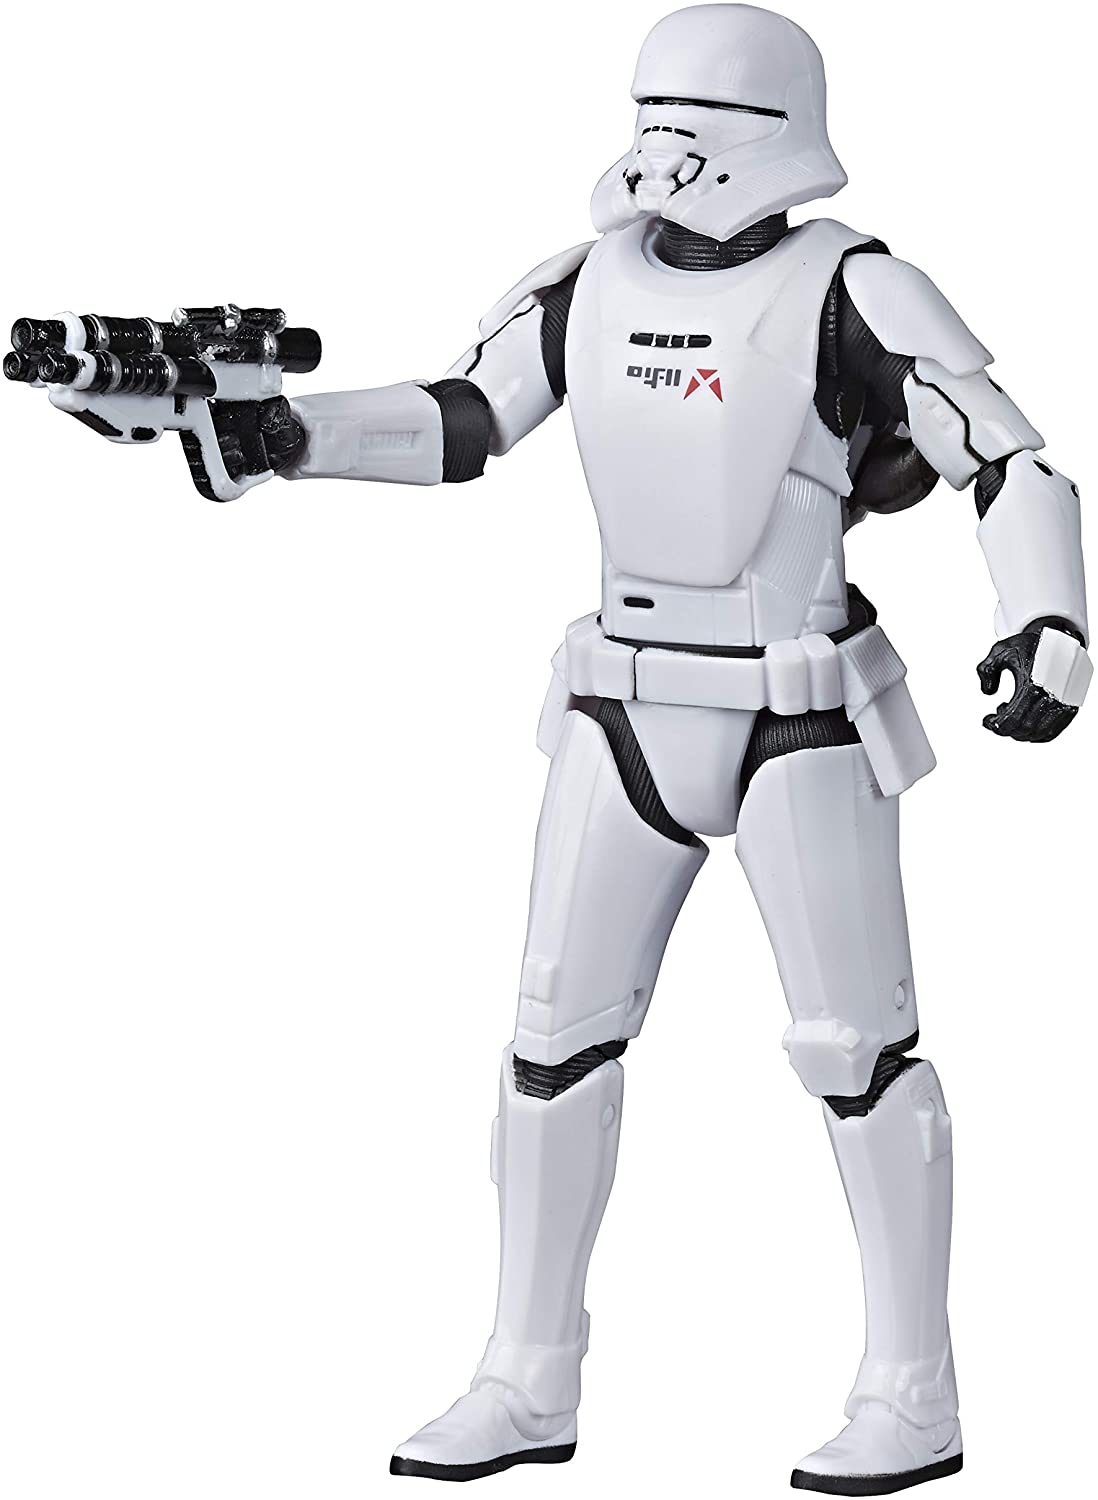 Hasbro Star Wars Black Series Force Awakens #99 First Order Jet Trooper 6 Inch Action Figure